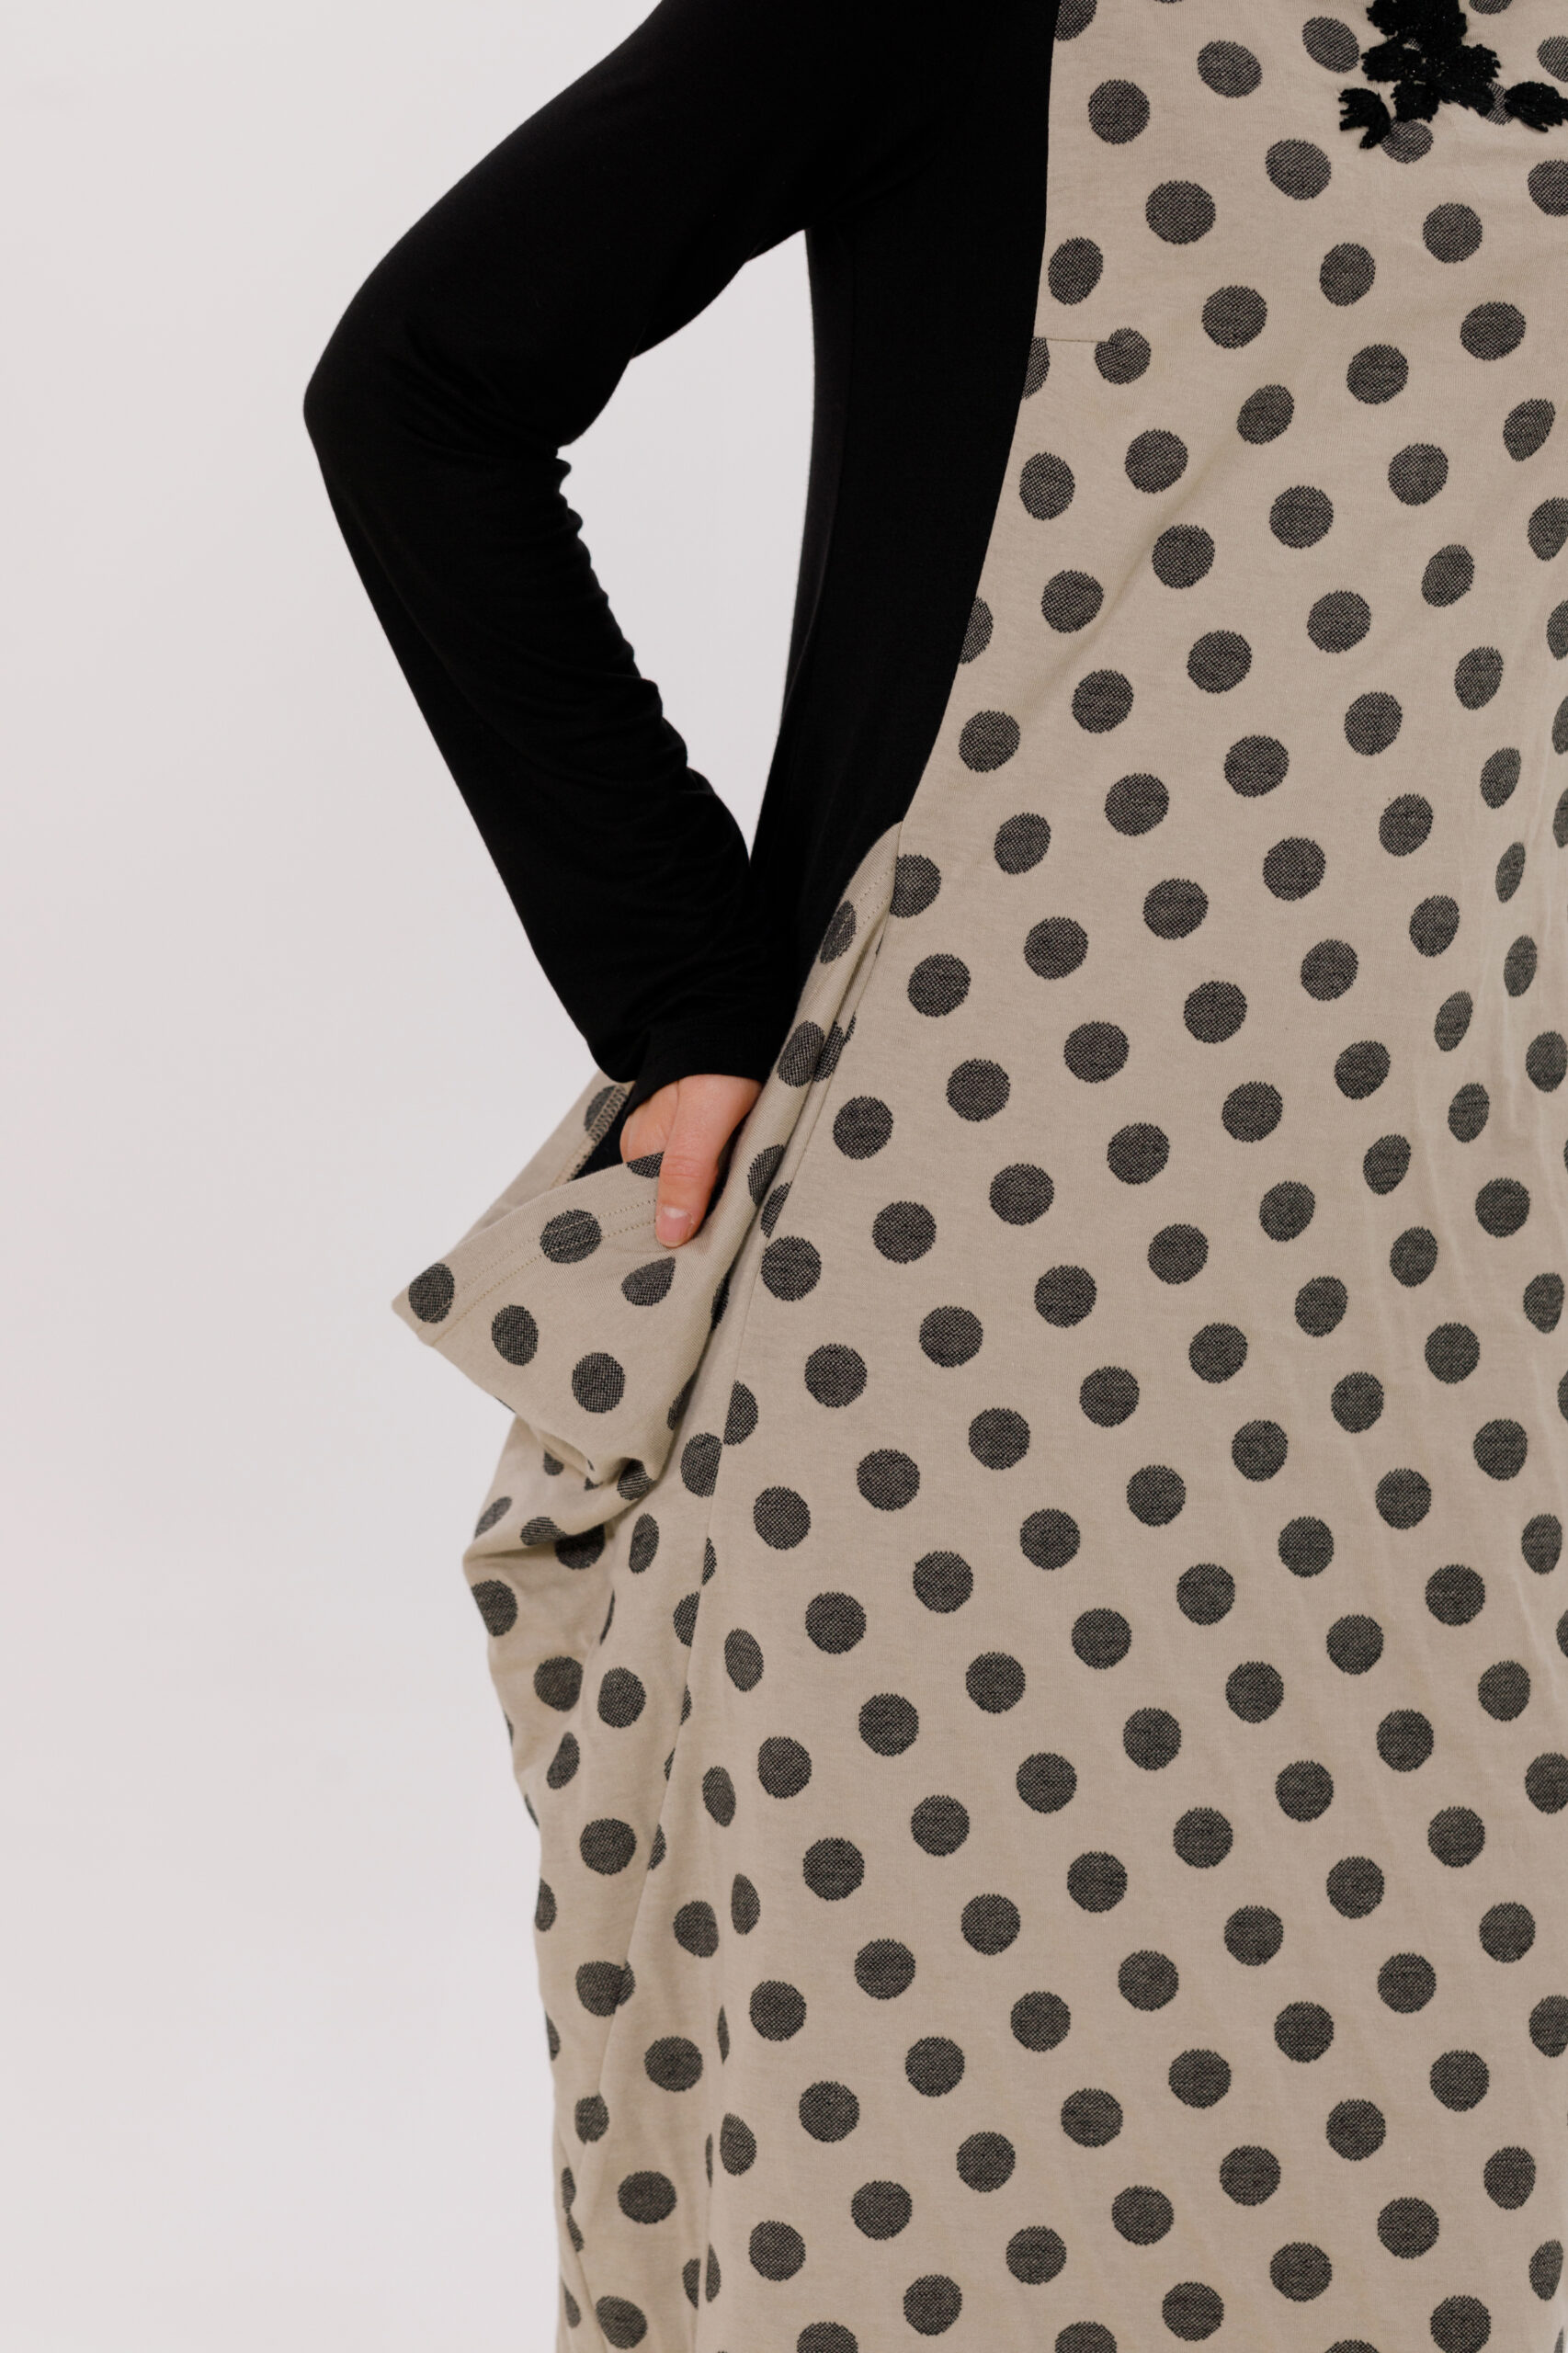 ROA cream jersey dress with polka dots. Natural fabrics, original design, handmade embroidery